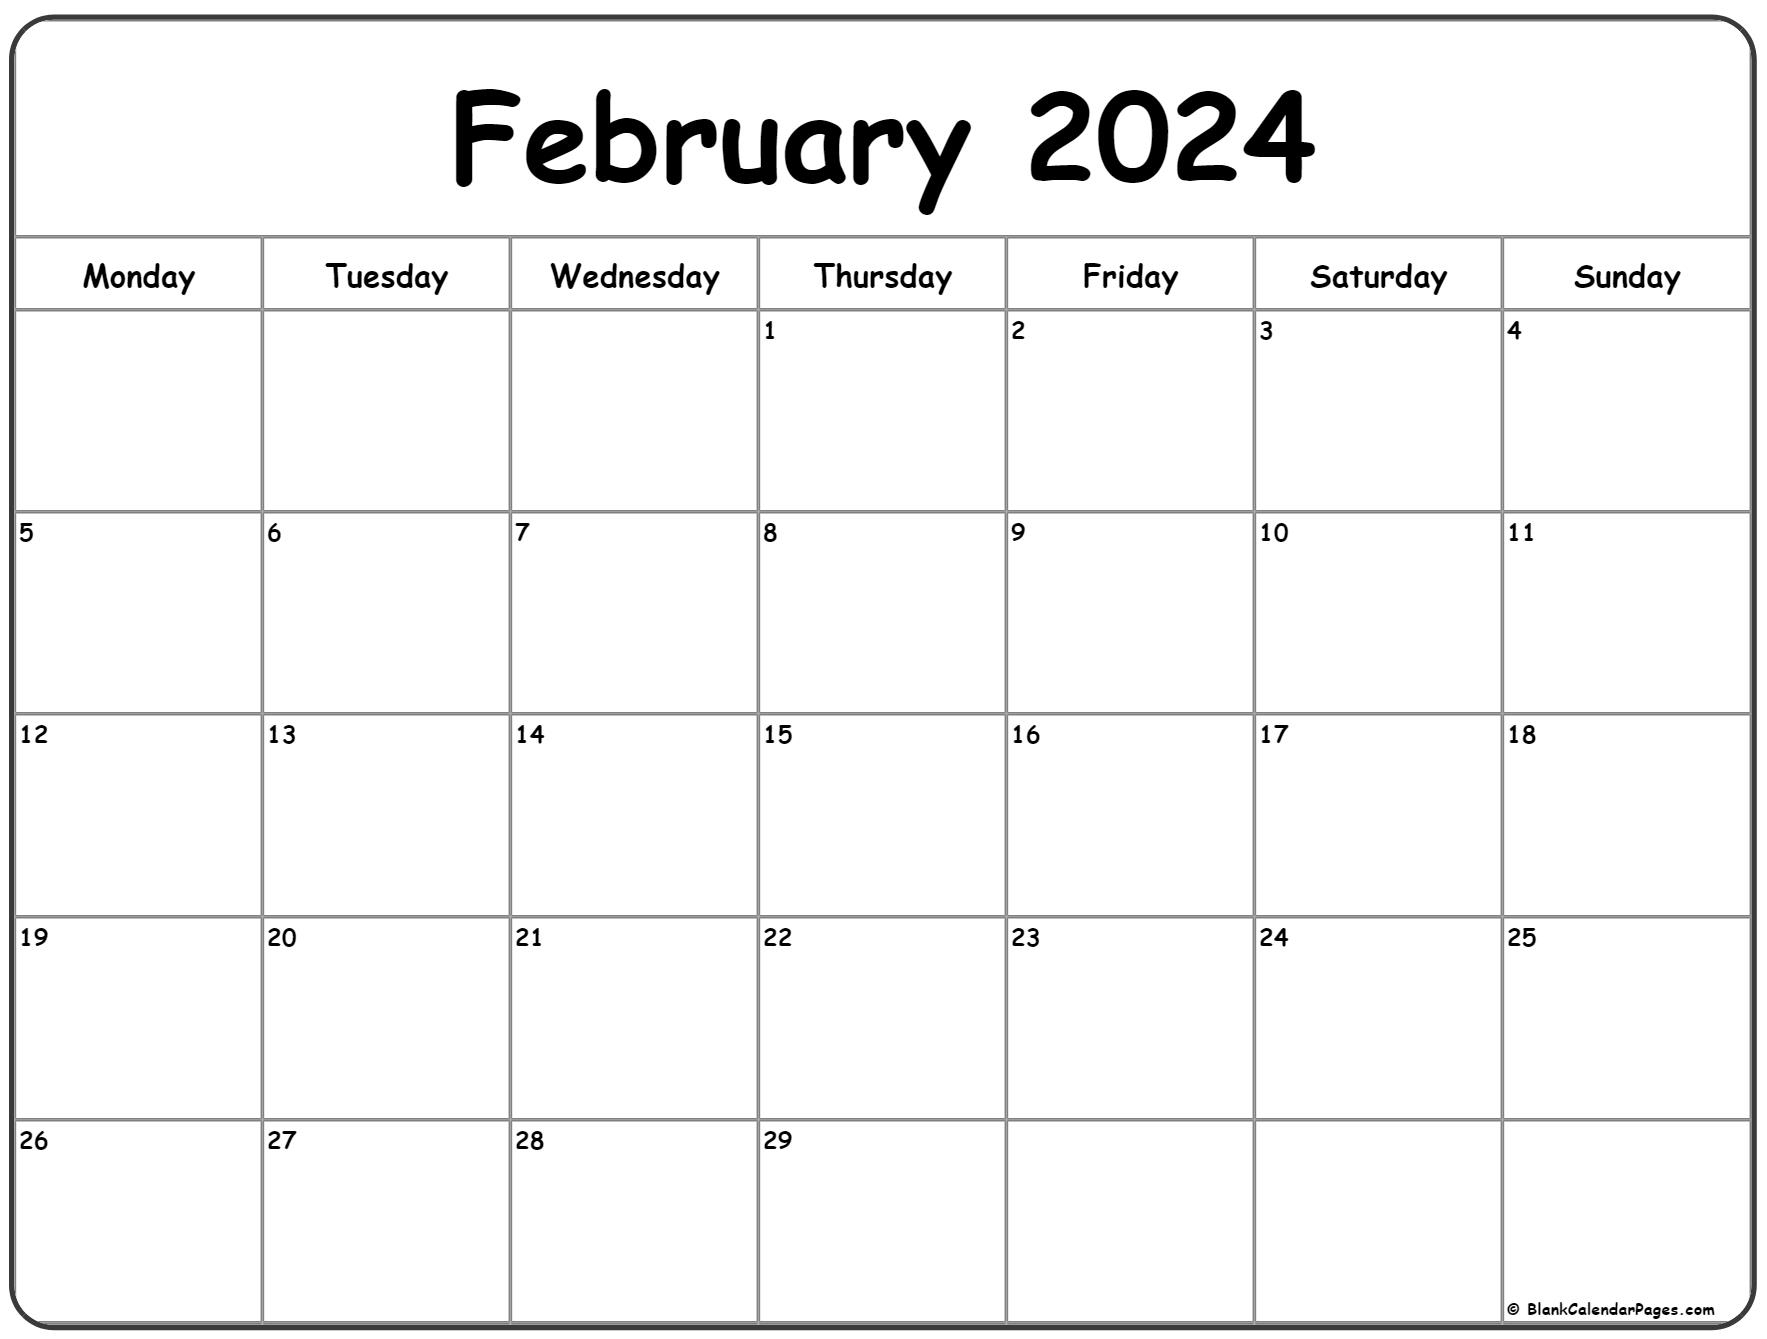 February 2024 Monday Calendar | Monday To Sunday for Free Printable Feb Calendar 2024